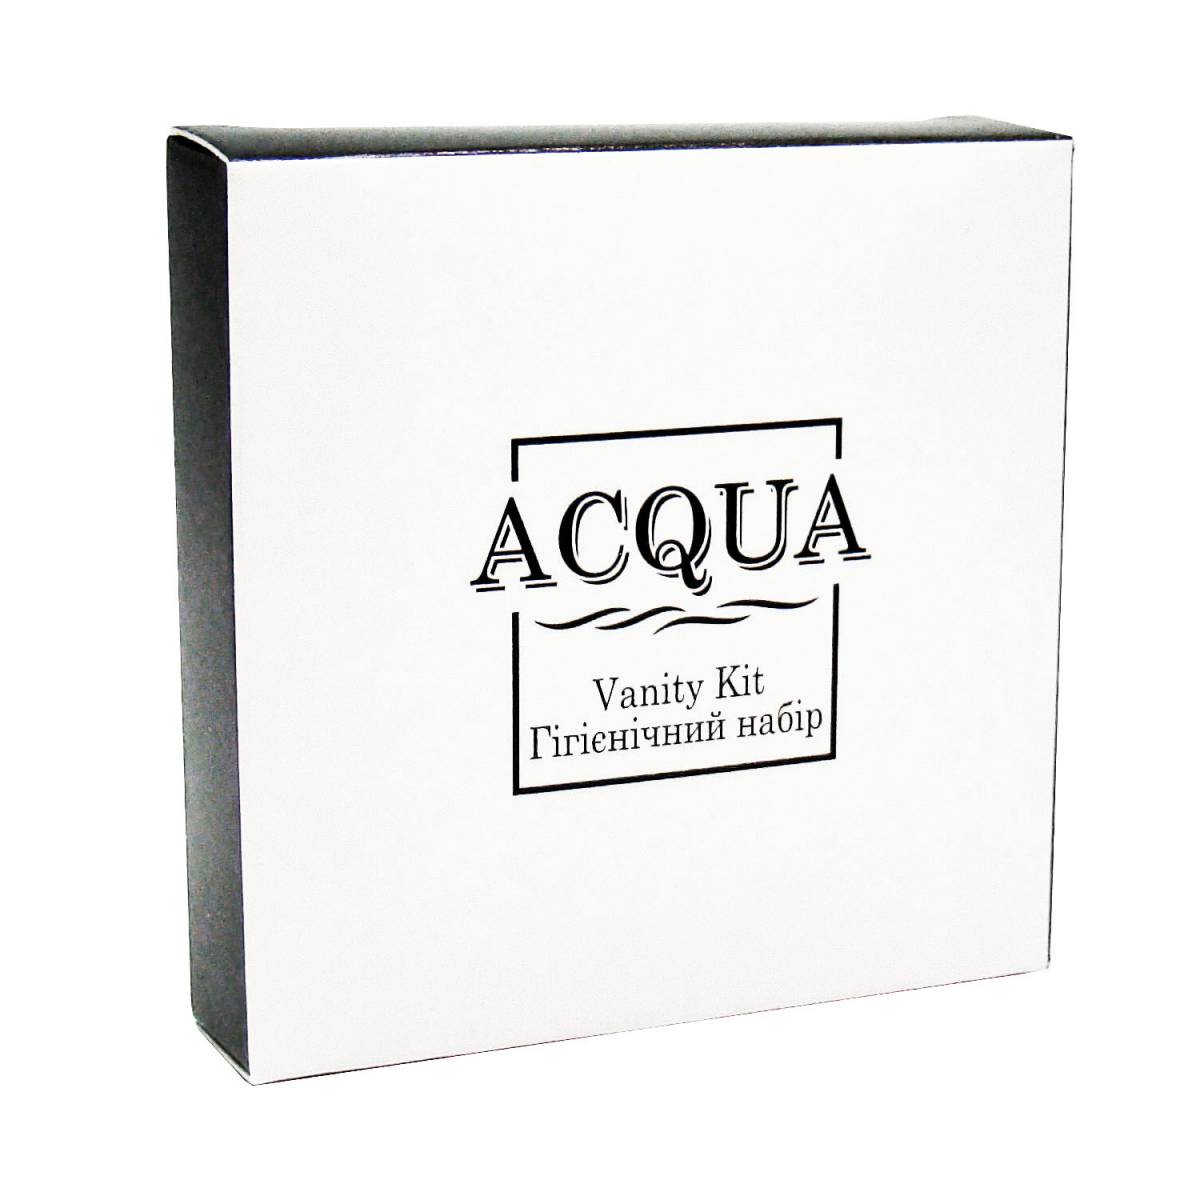 Косметический набор ACQUA для гостиниц VIP, в п/е и картонной коробочке Q-VKL4/2 HSG